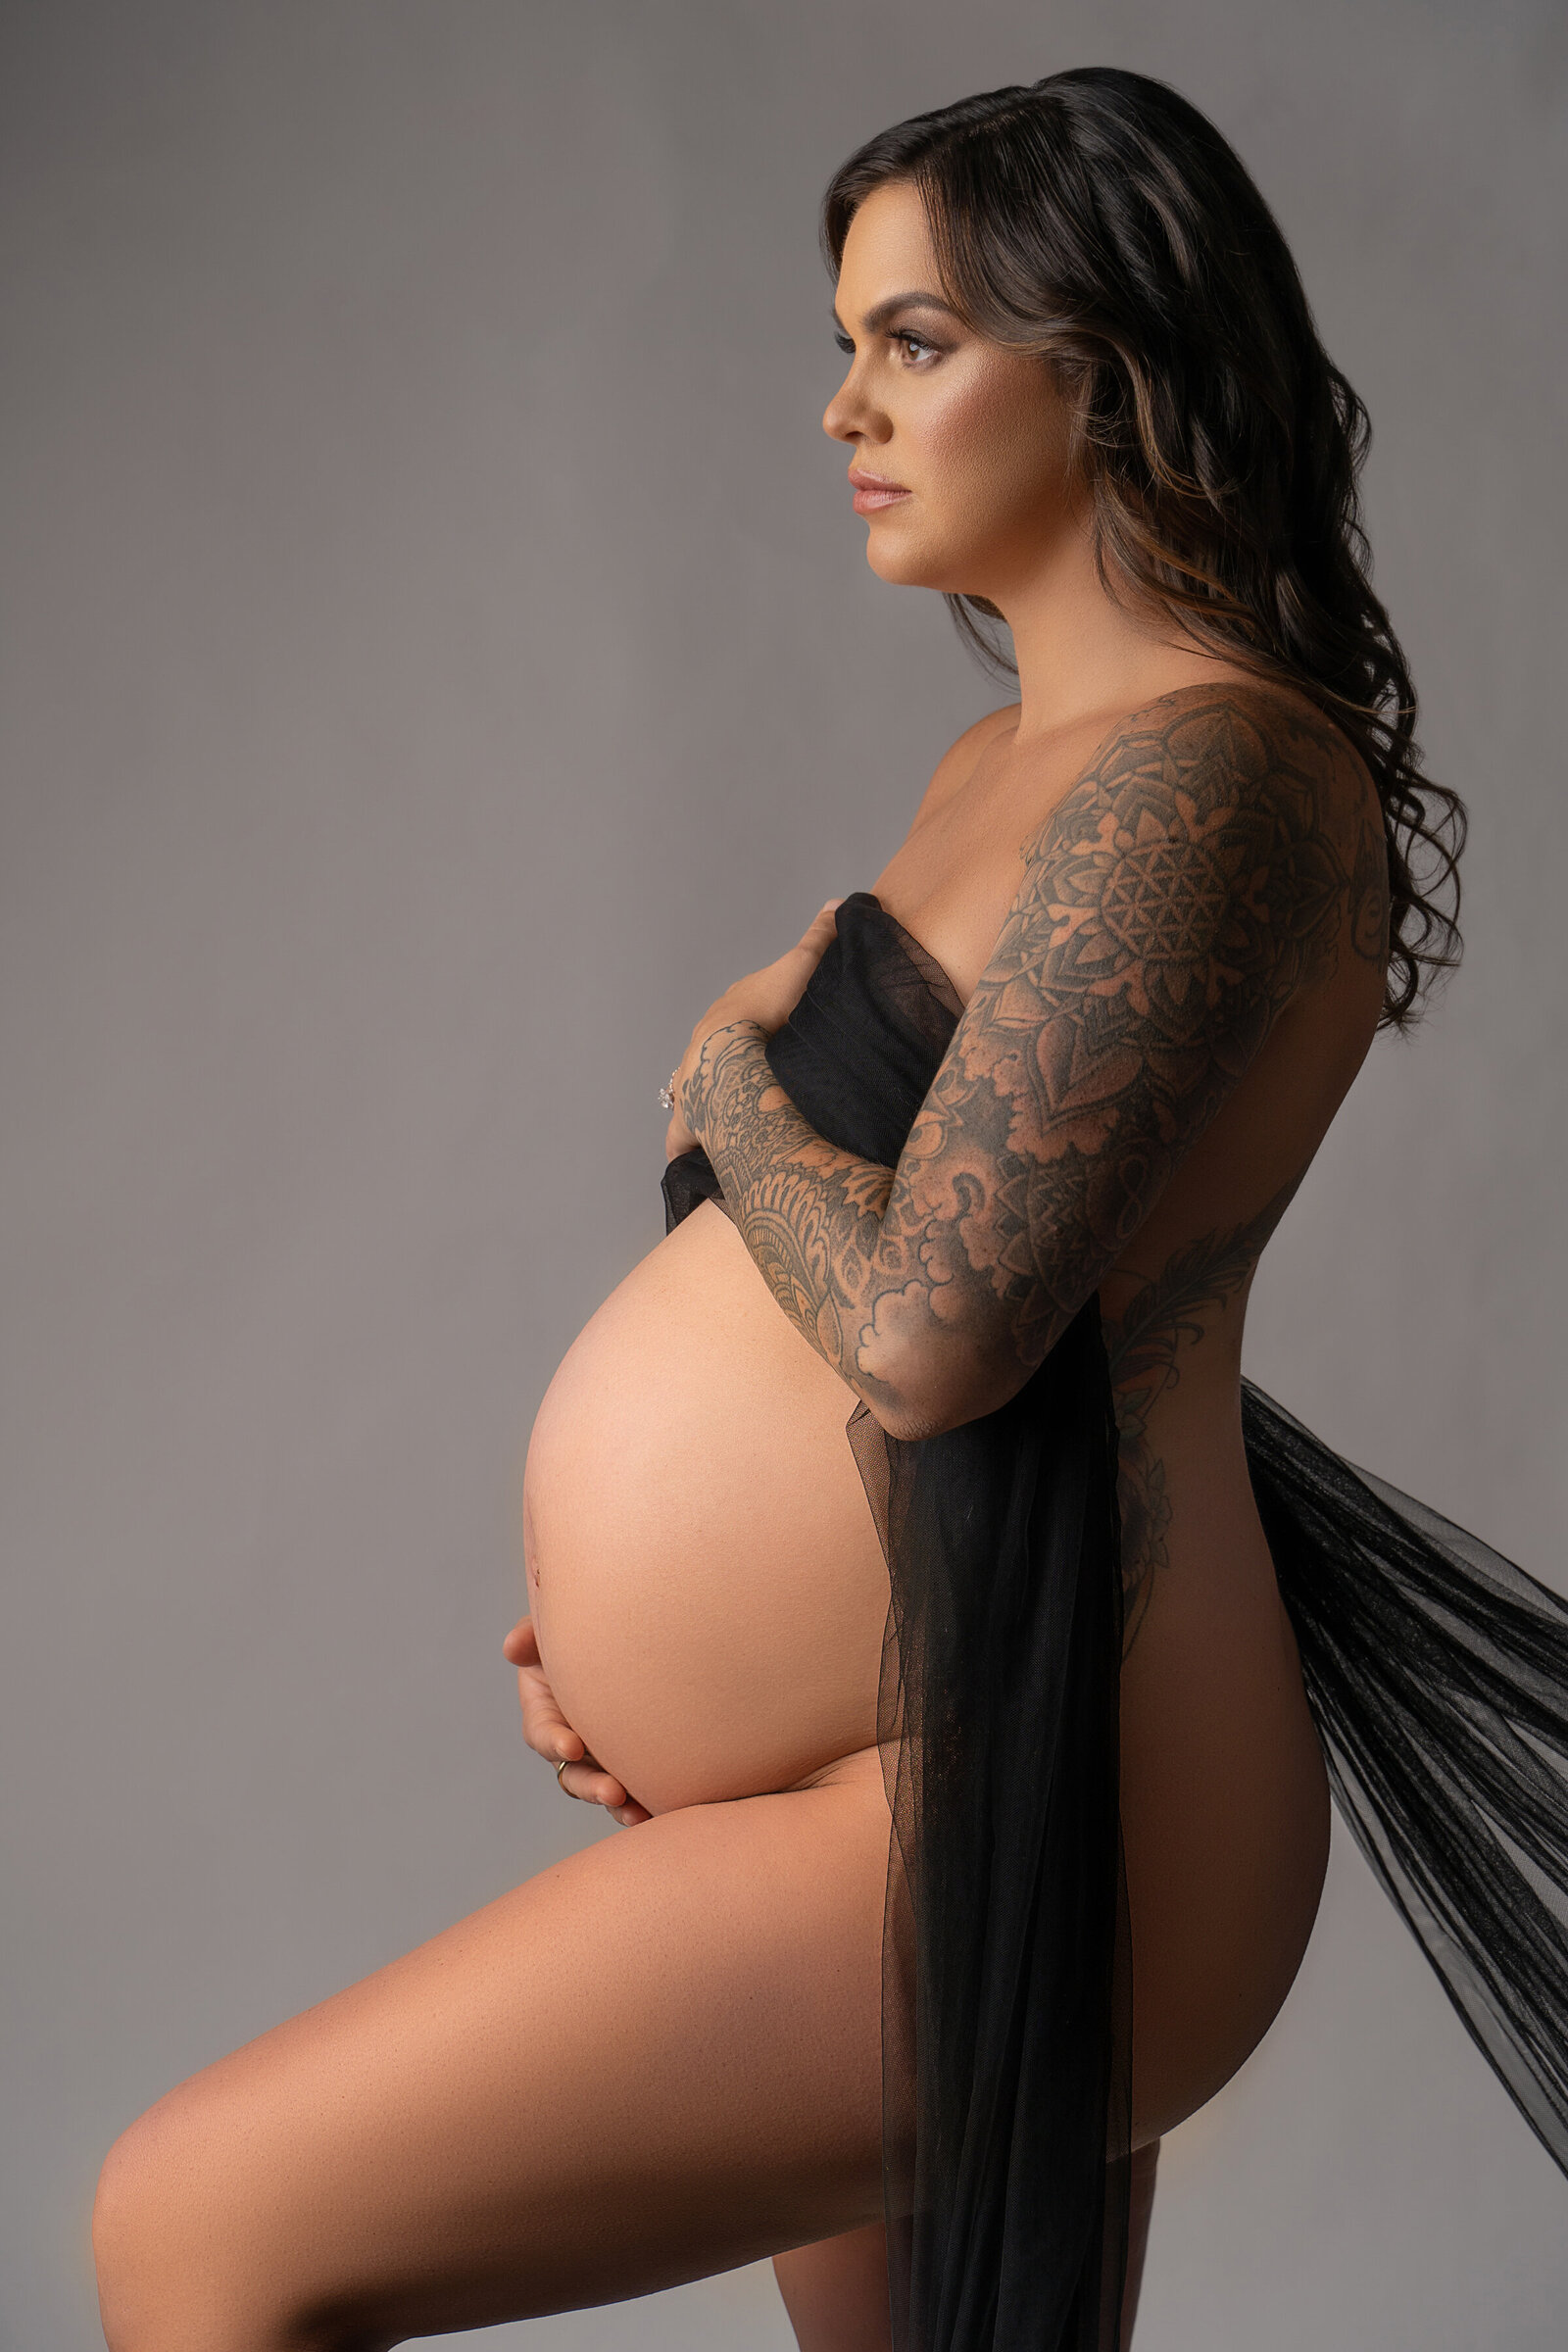 Fine art nude maternity photographer in NC